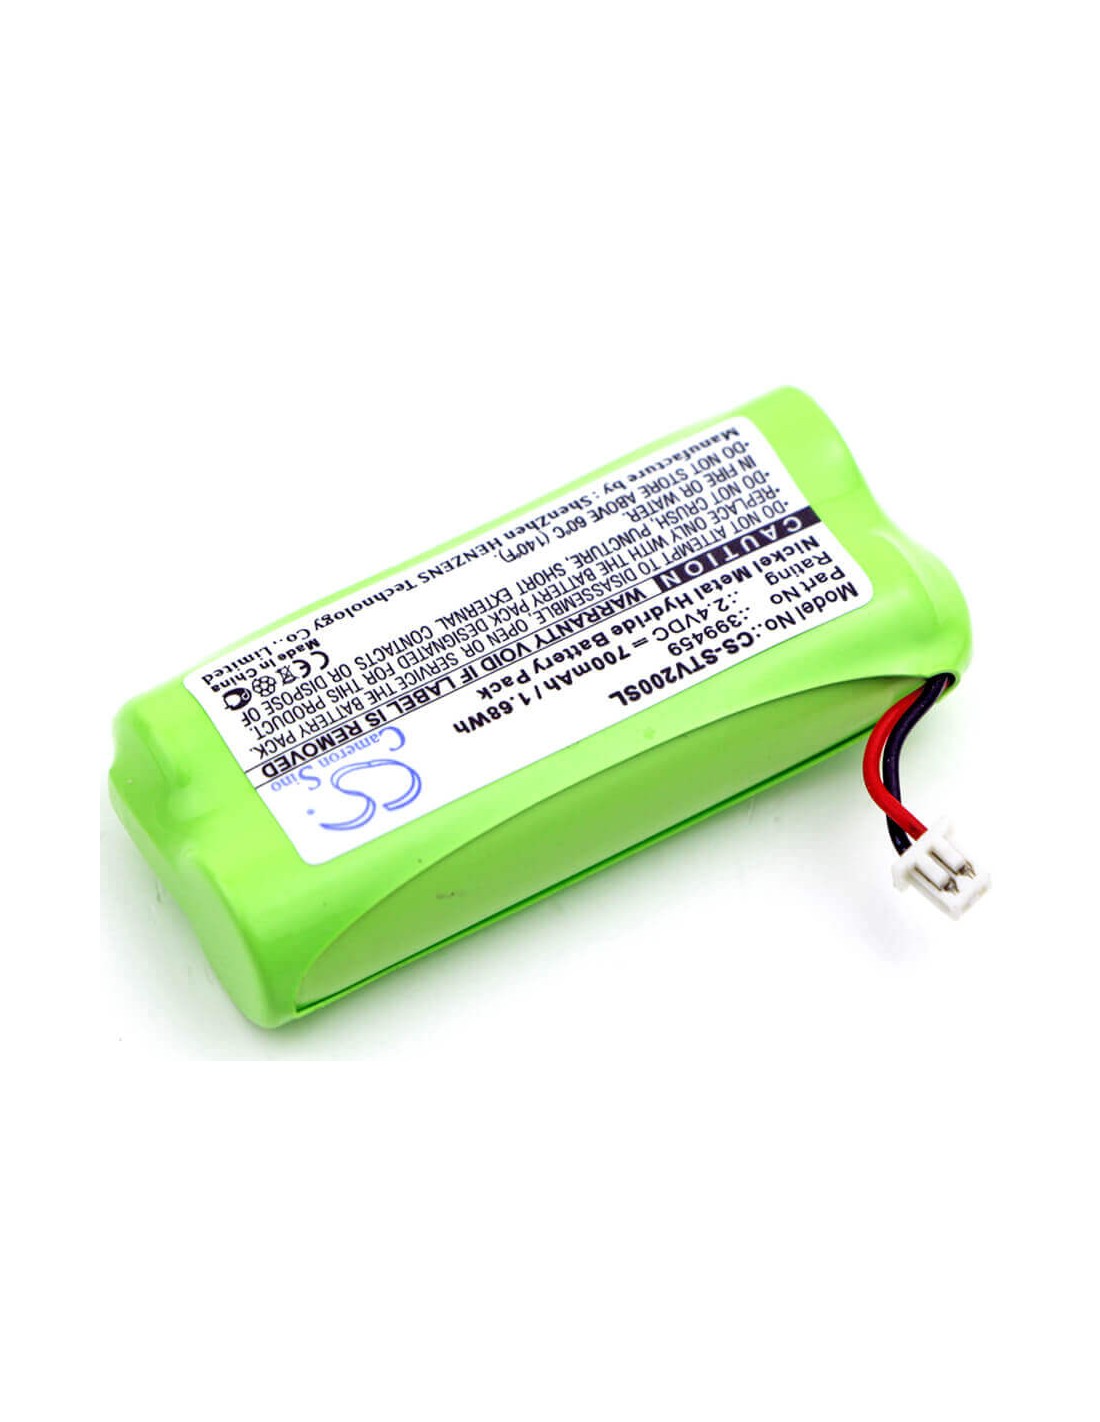 Battery for Stageclix, Jack V2 Transmitter 2.4V, 700mAh - 1.68Wh